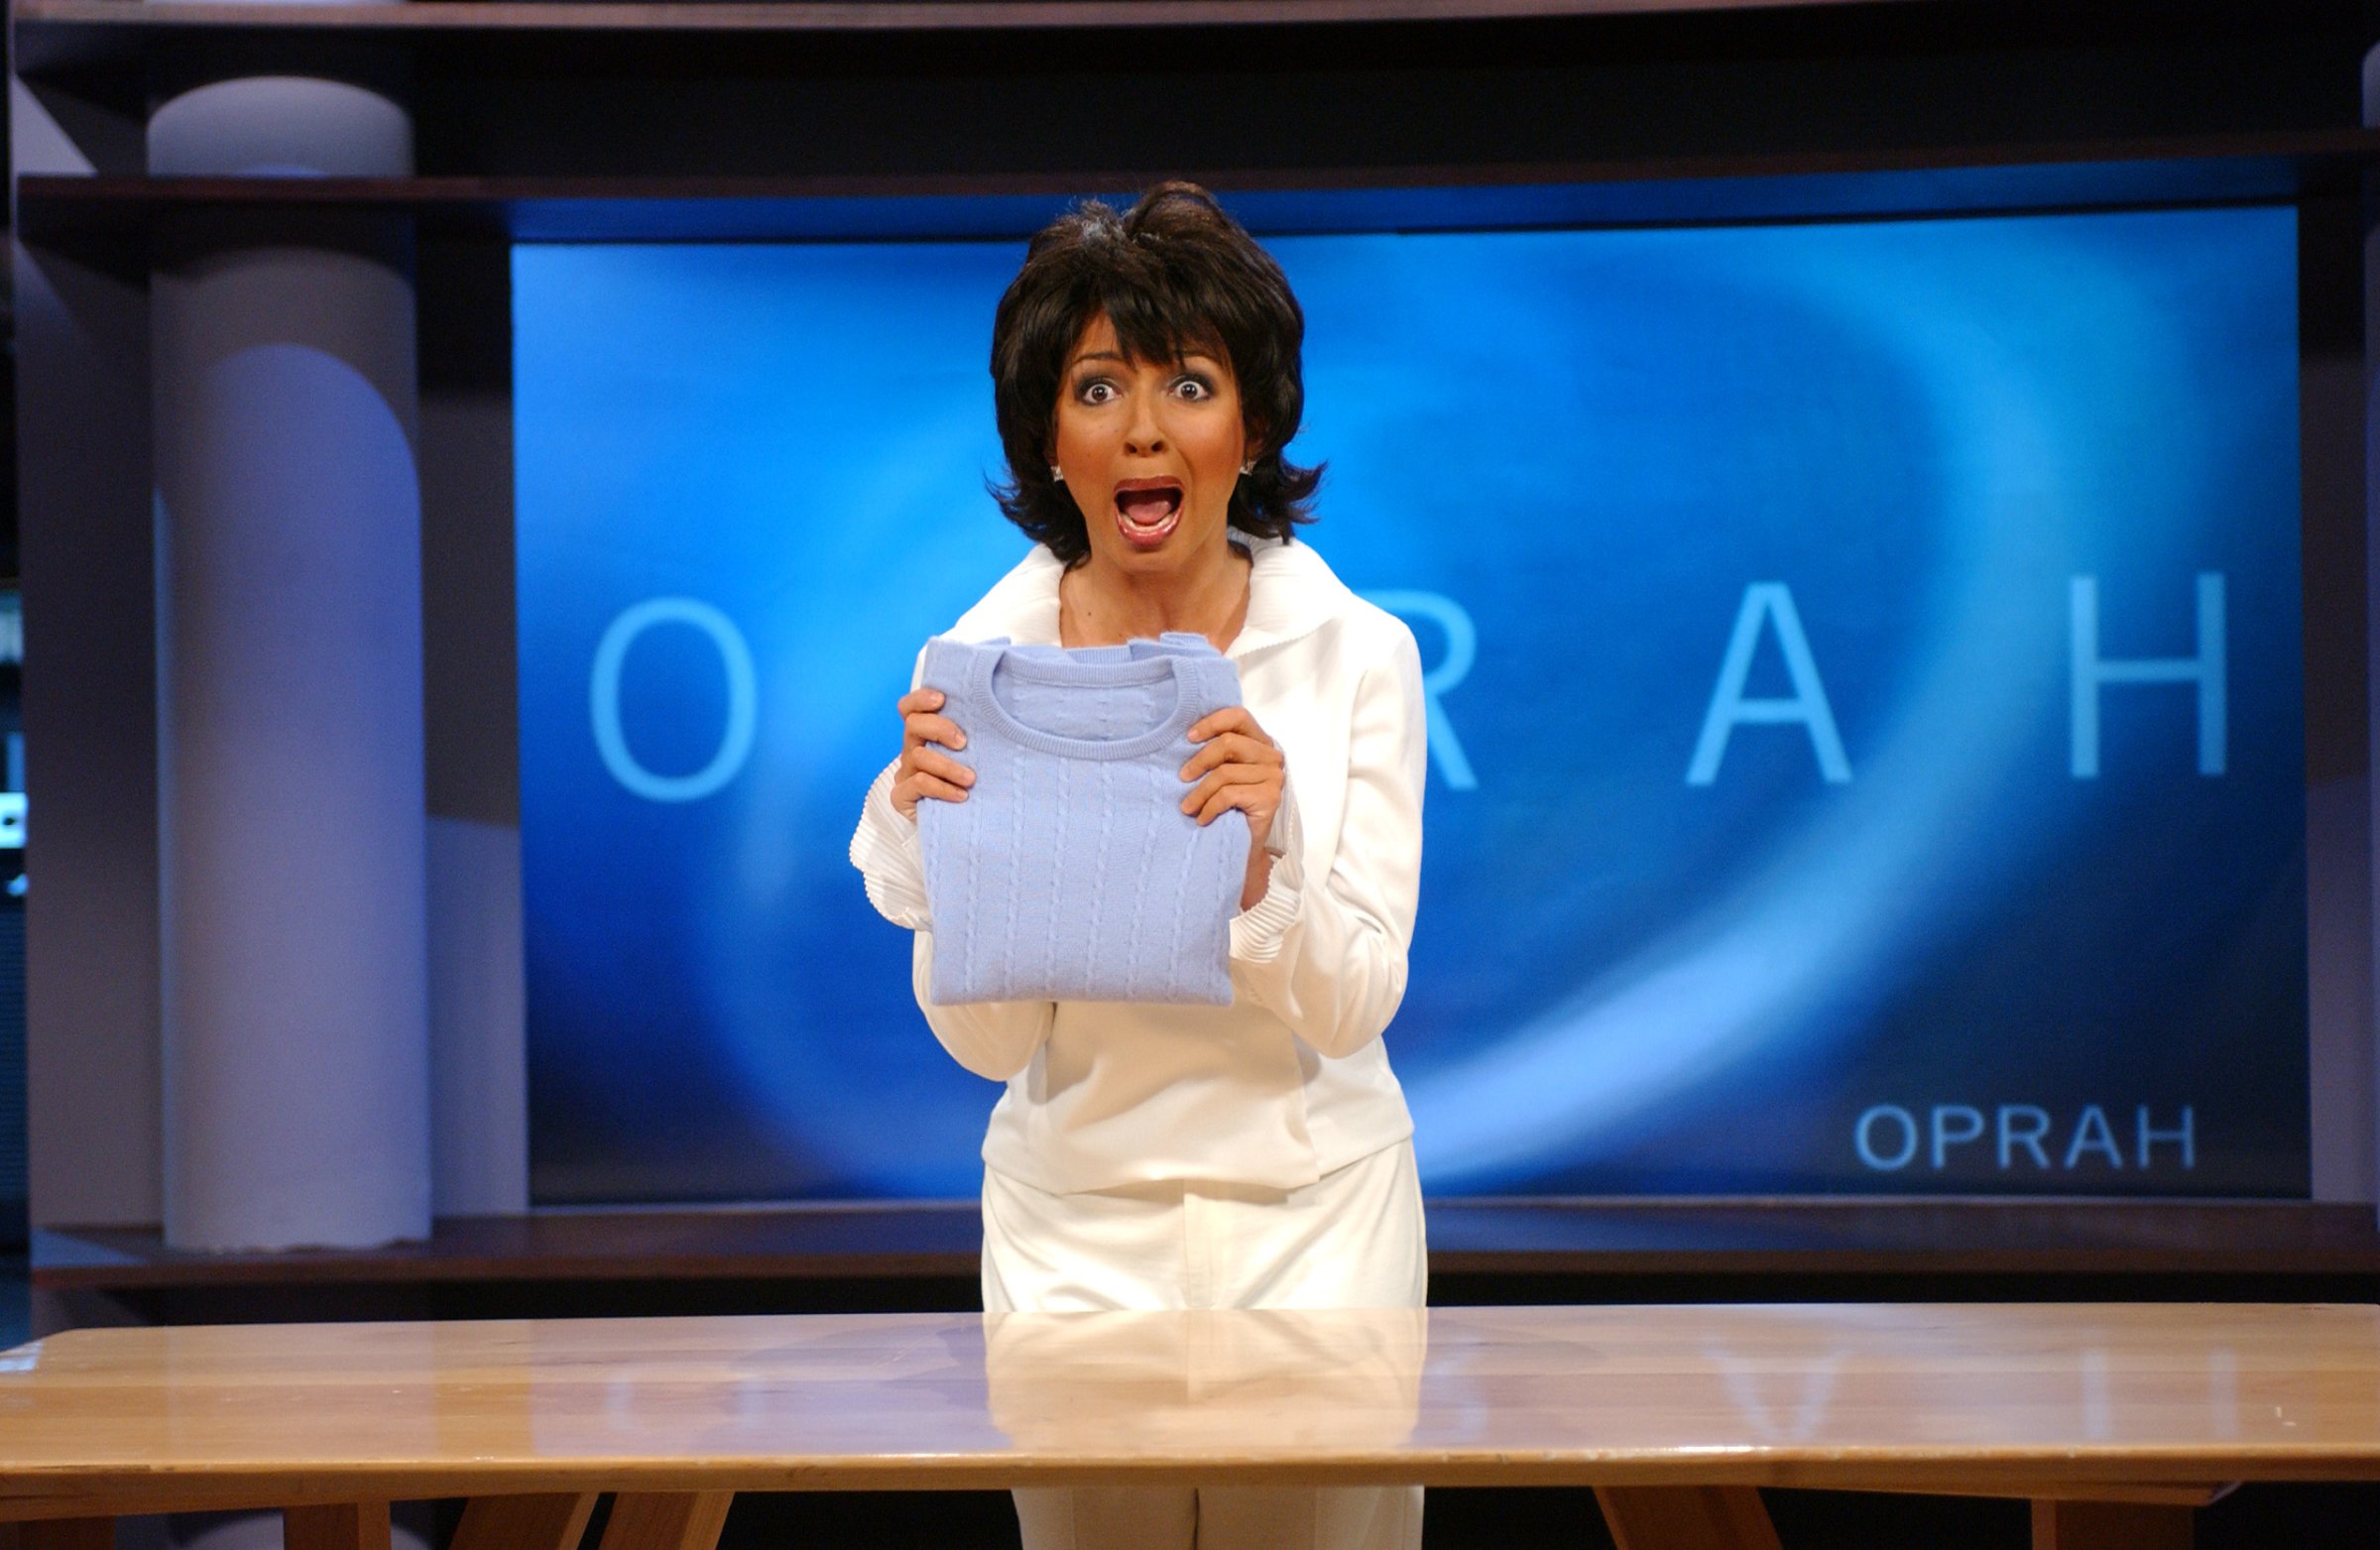 Maya Rudolph as Oprah Winfrey during the "Oprah" skit on Saturday Night Live on February 7, 2004.